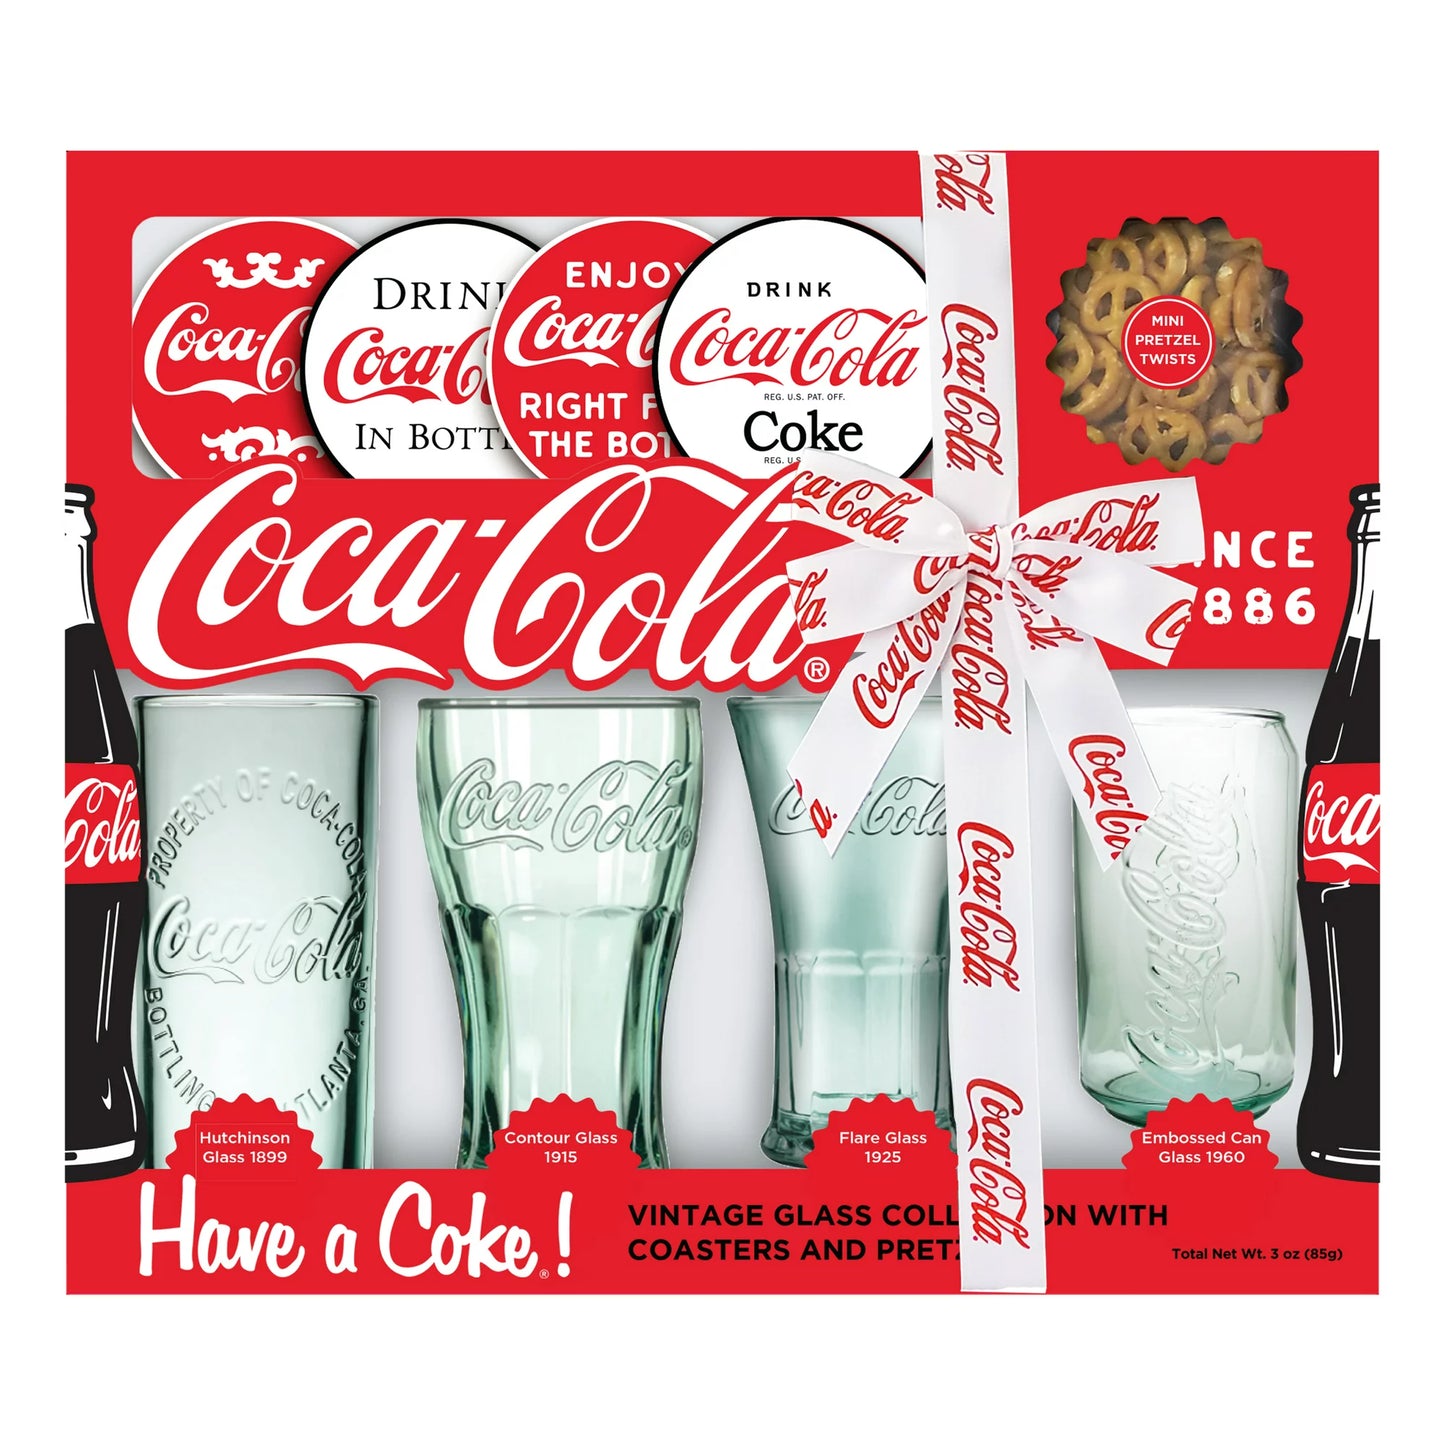 Coca Cola Glass Collectors Set with Vintage Glasses, Coasters, and Pretzels, 3 oz